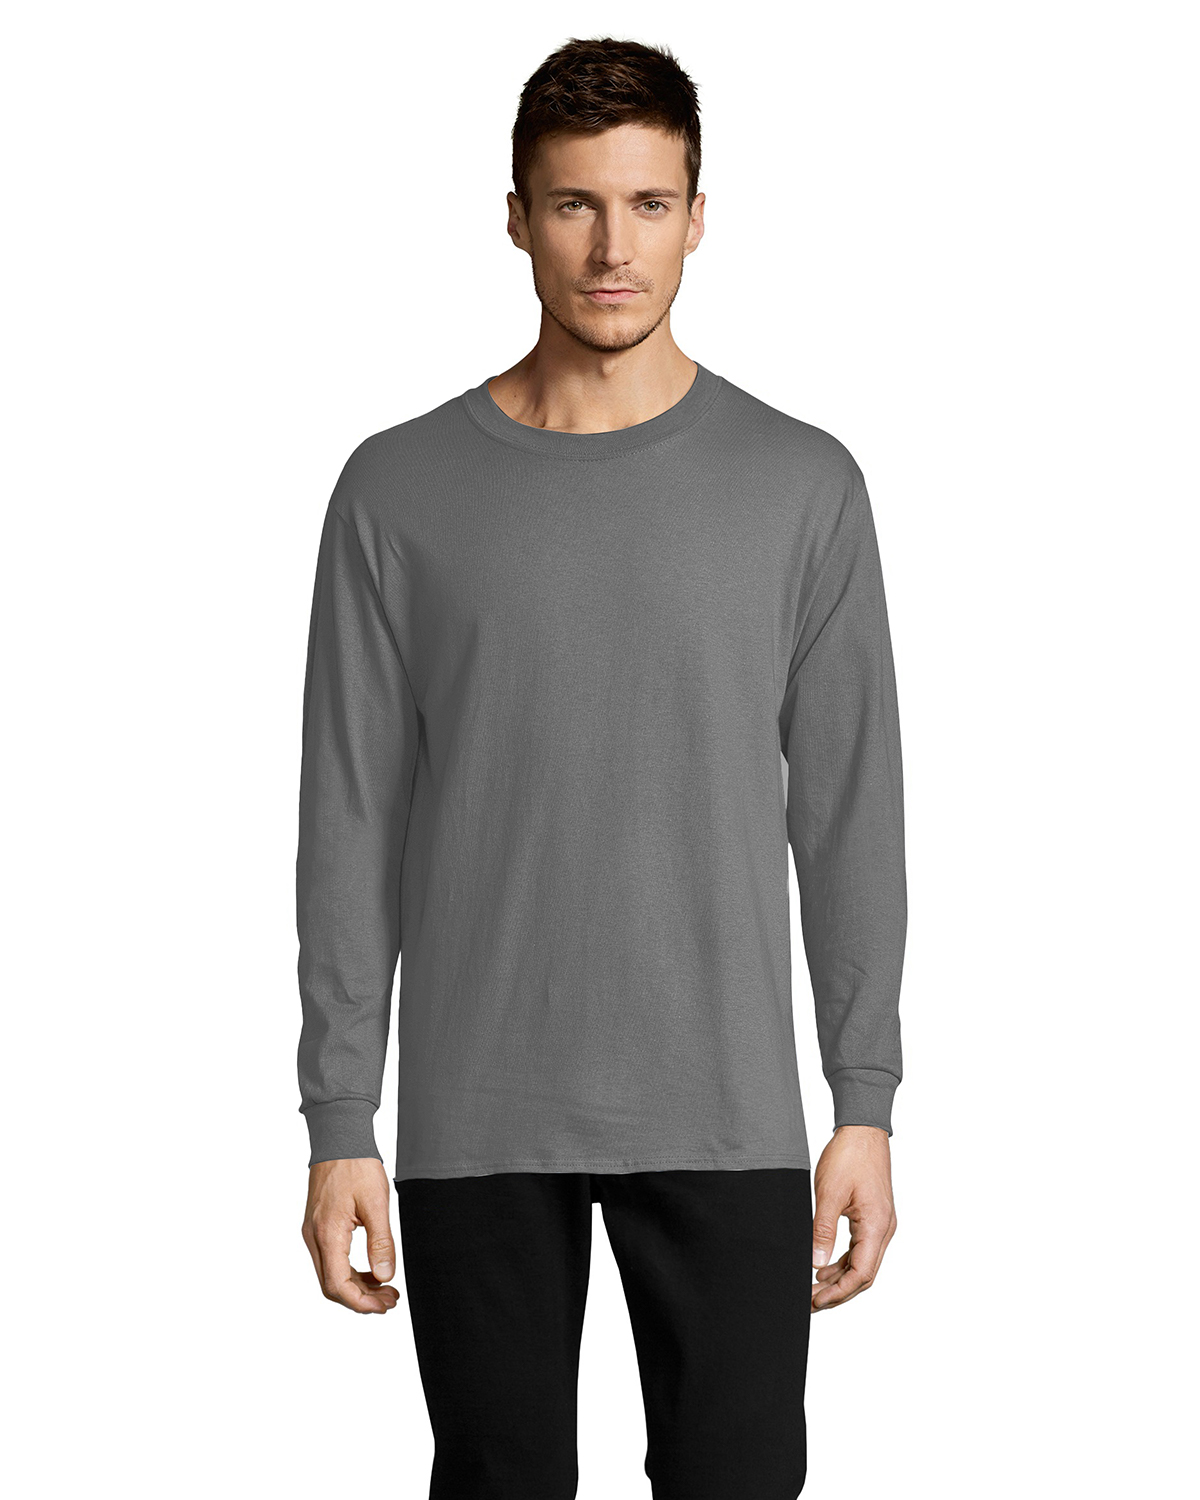 Hanes 5.2 oz ComfortSoft Cotton Long-Sleeve T-Shirt Black 5286 2XL 